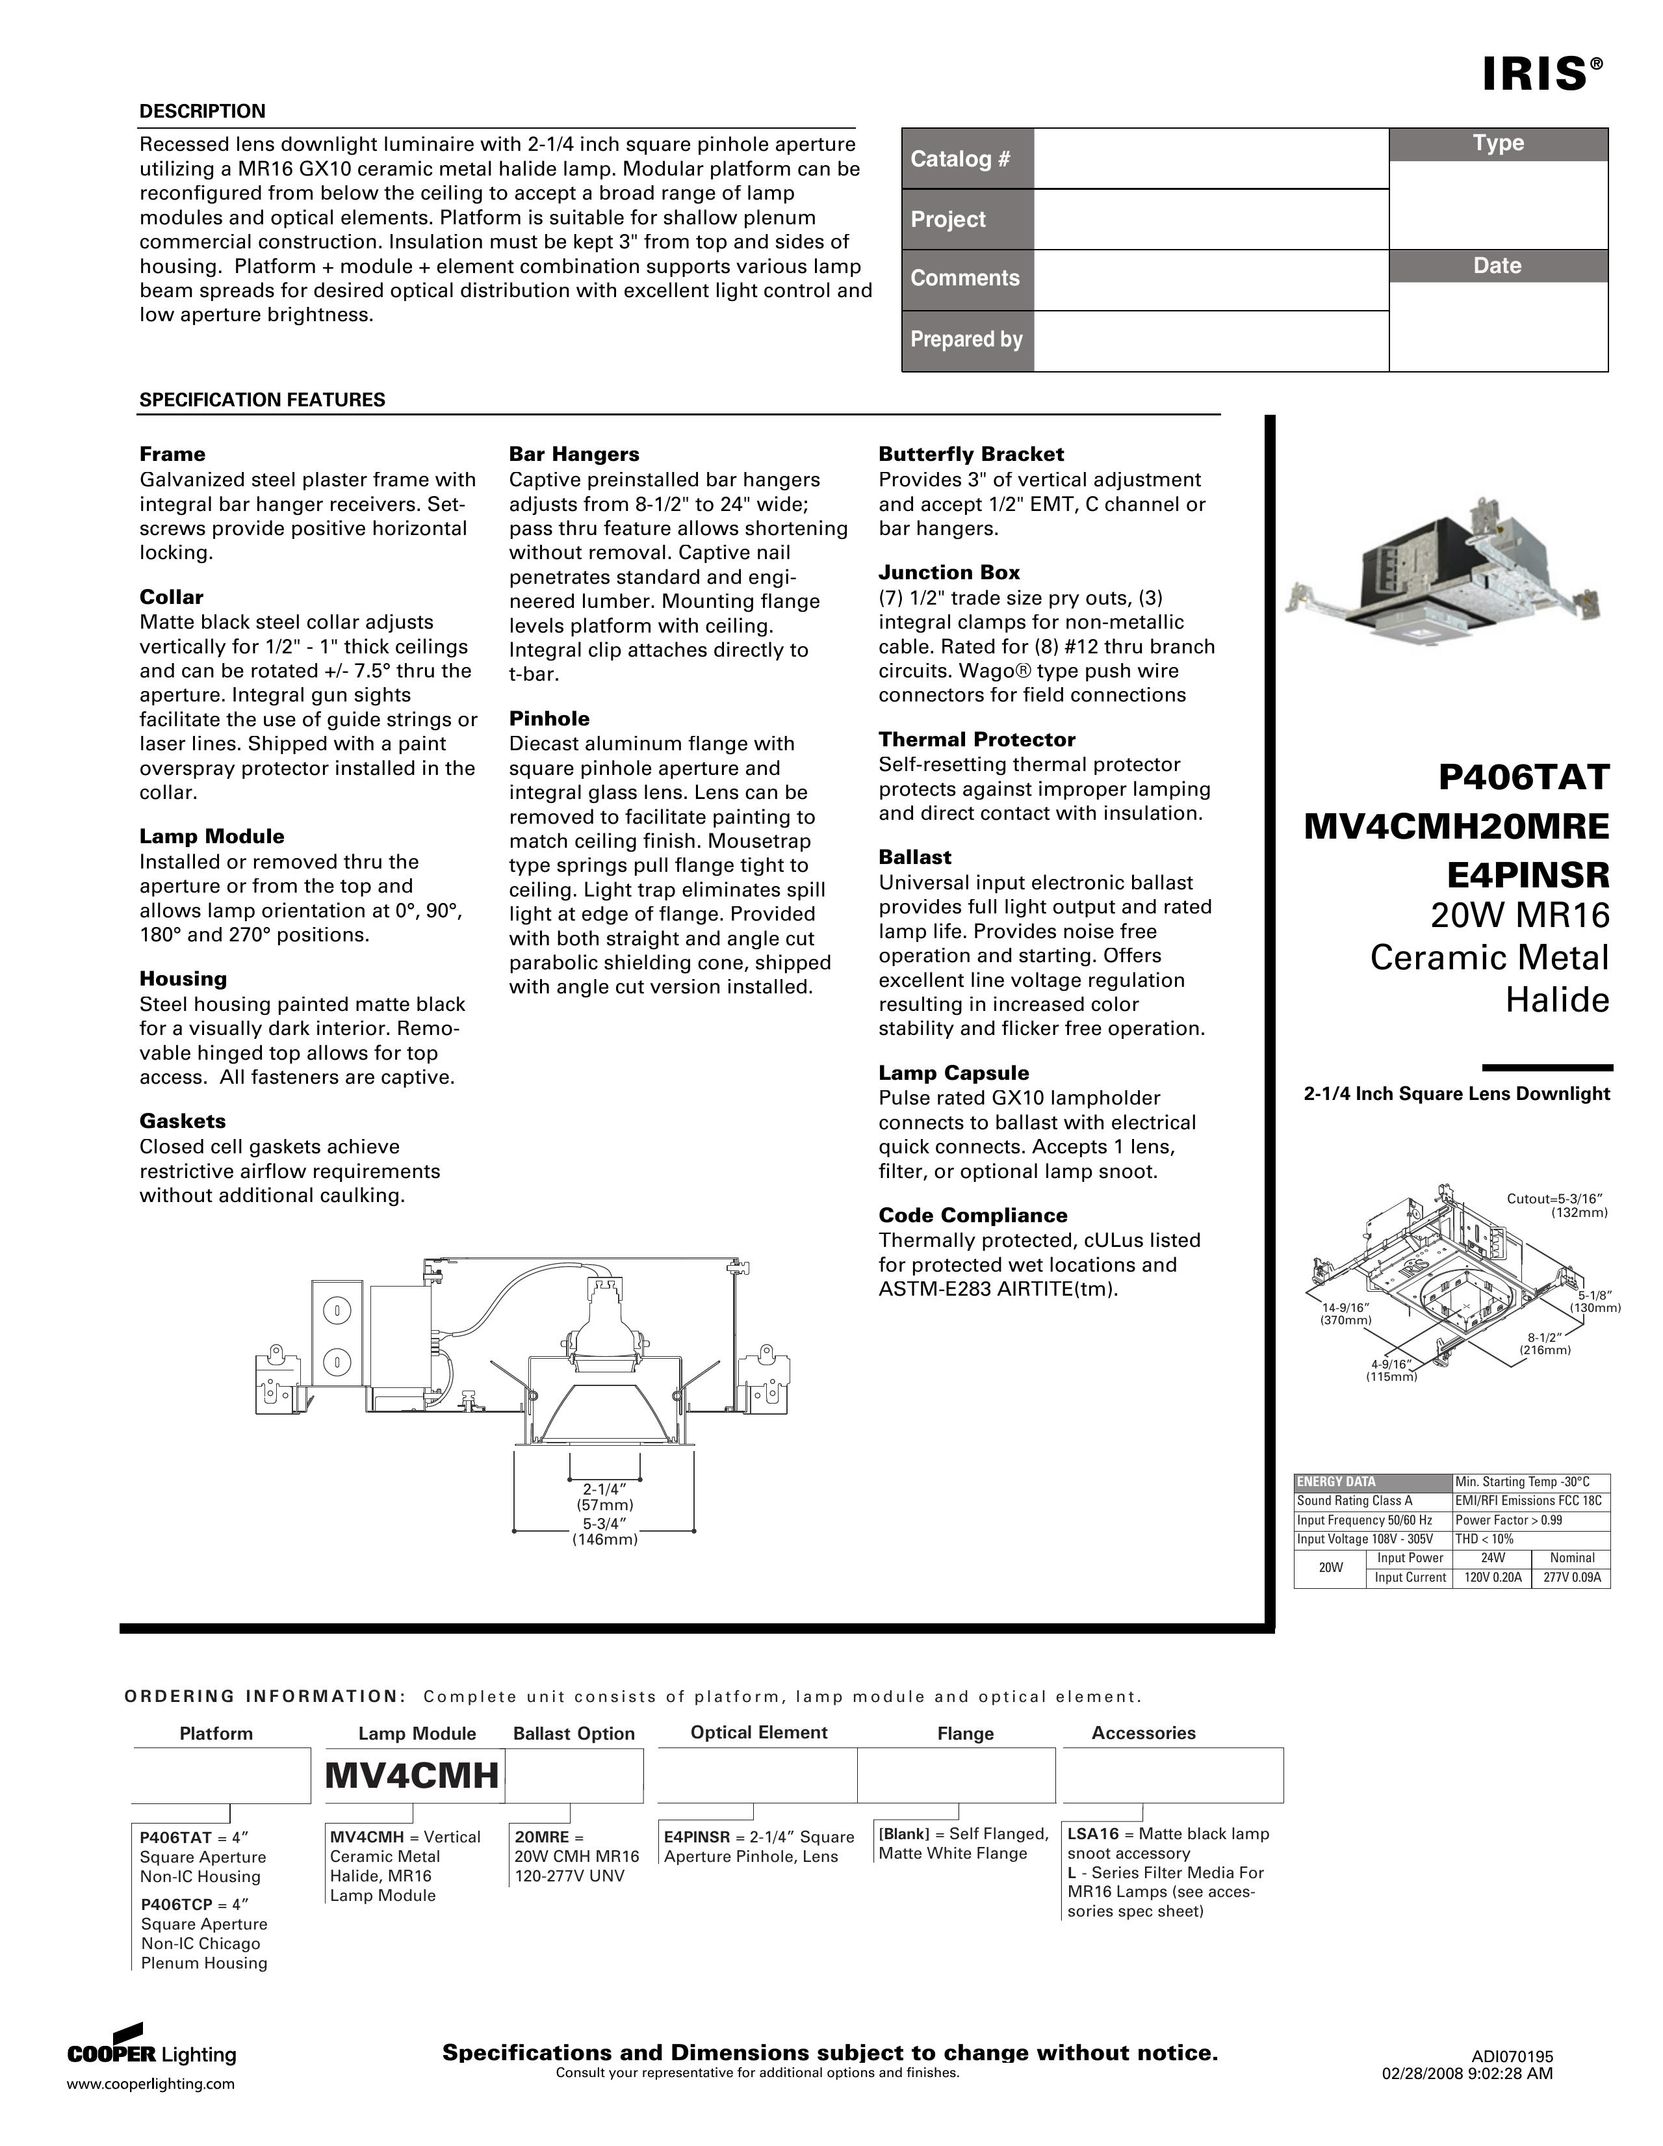 IRIS MV4CMH20MRE Indoor Furnishings User Manual